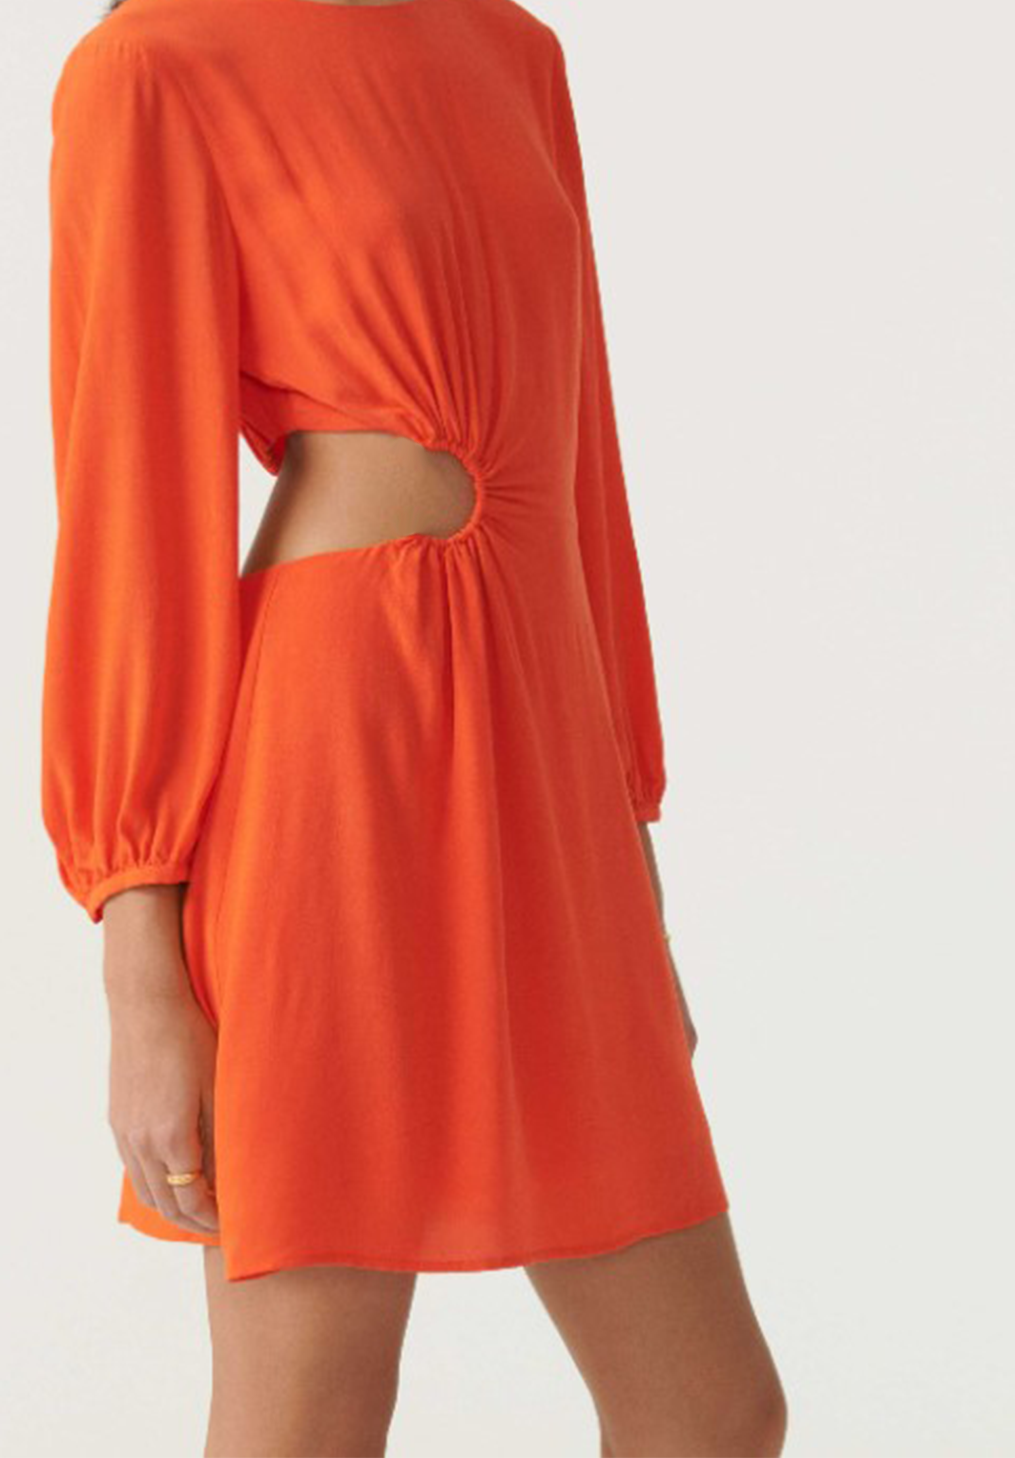 Gutsy Orange Dress